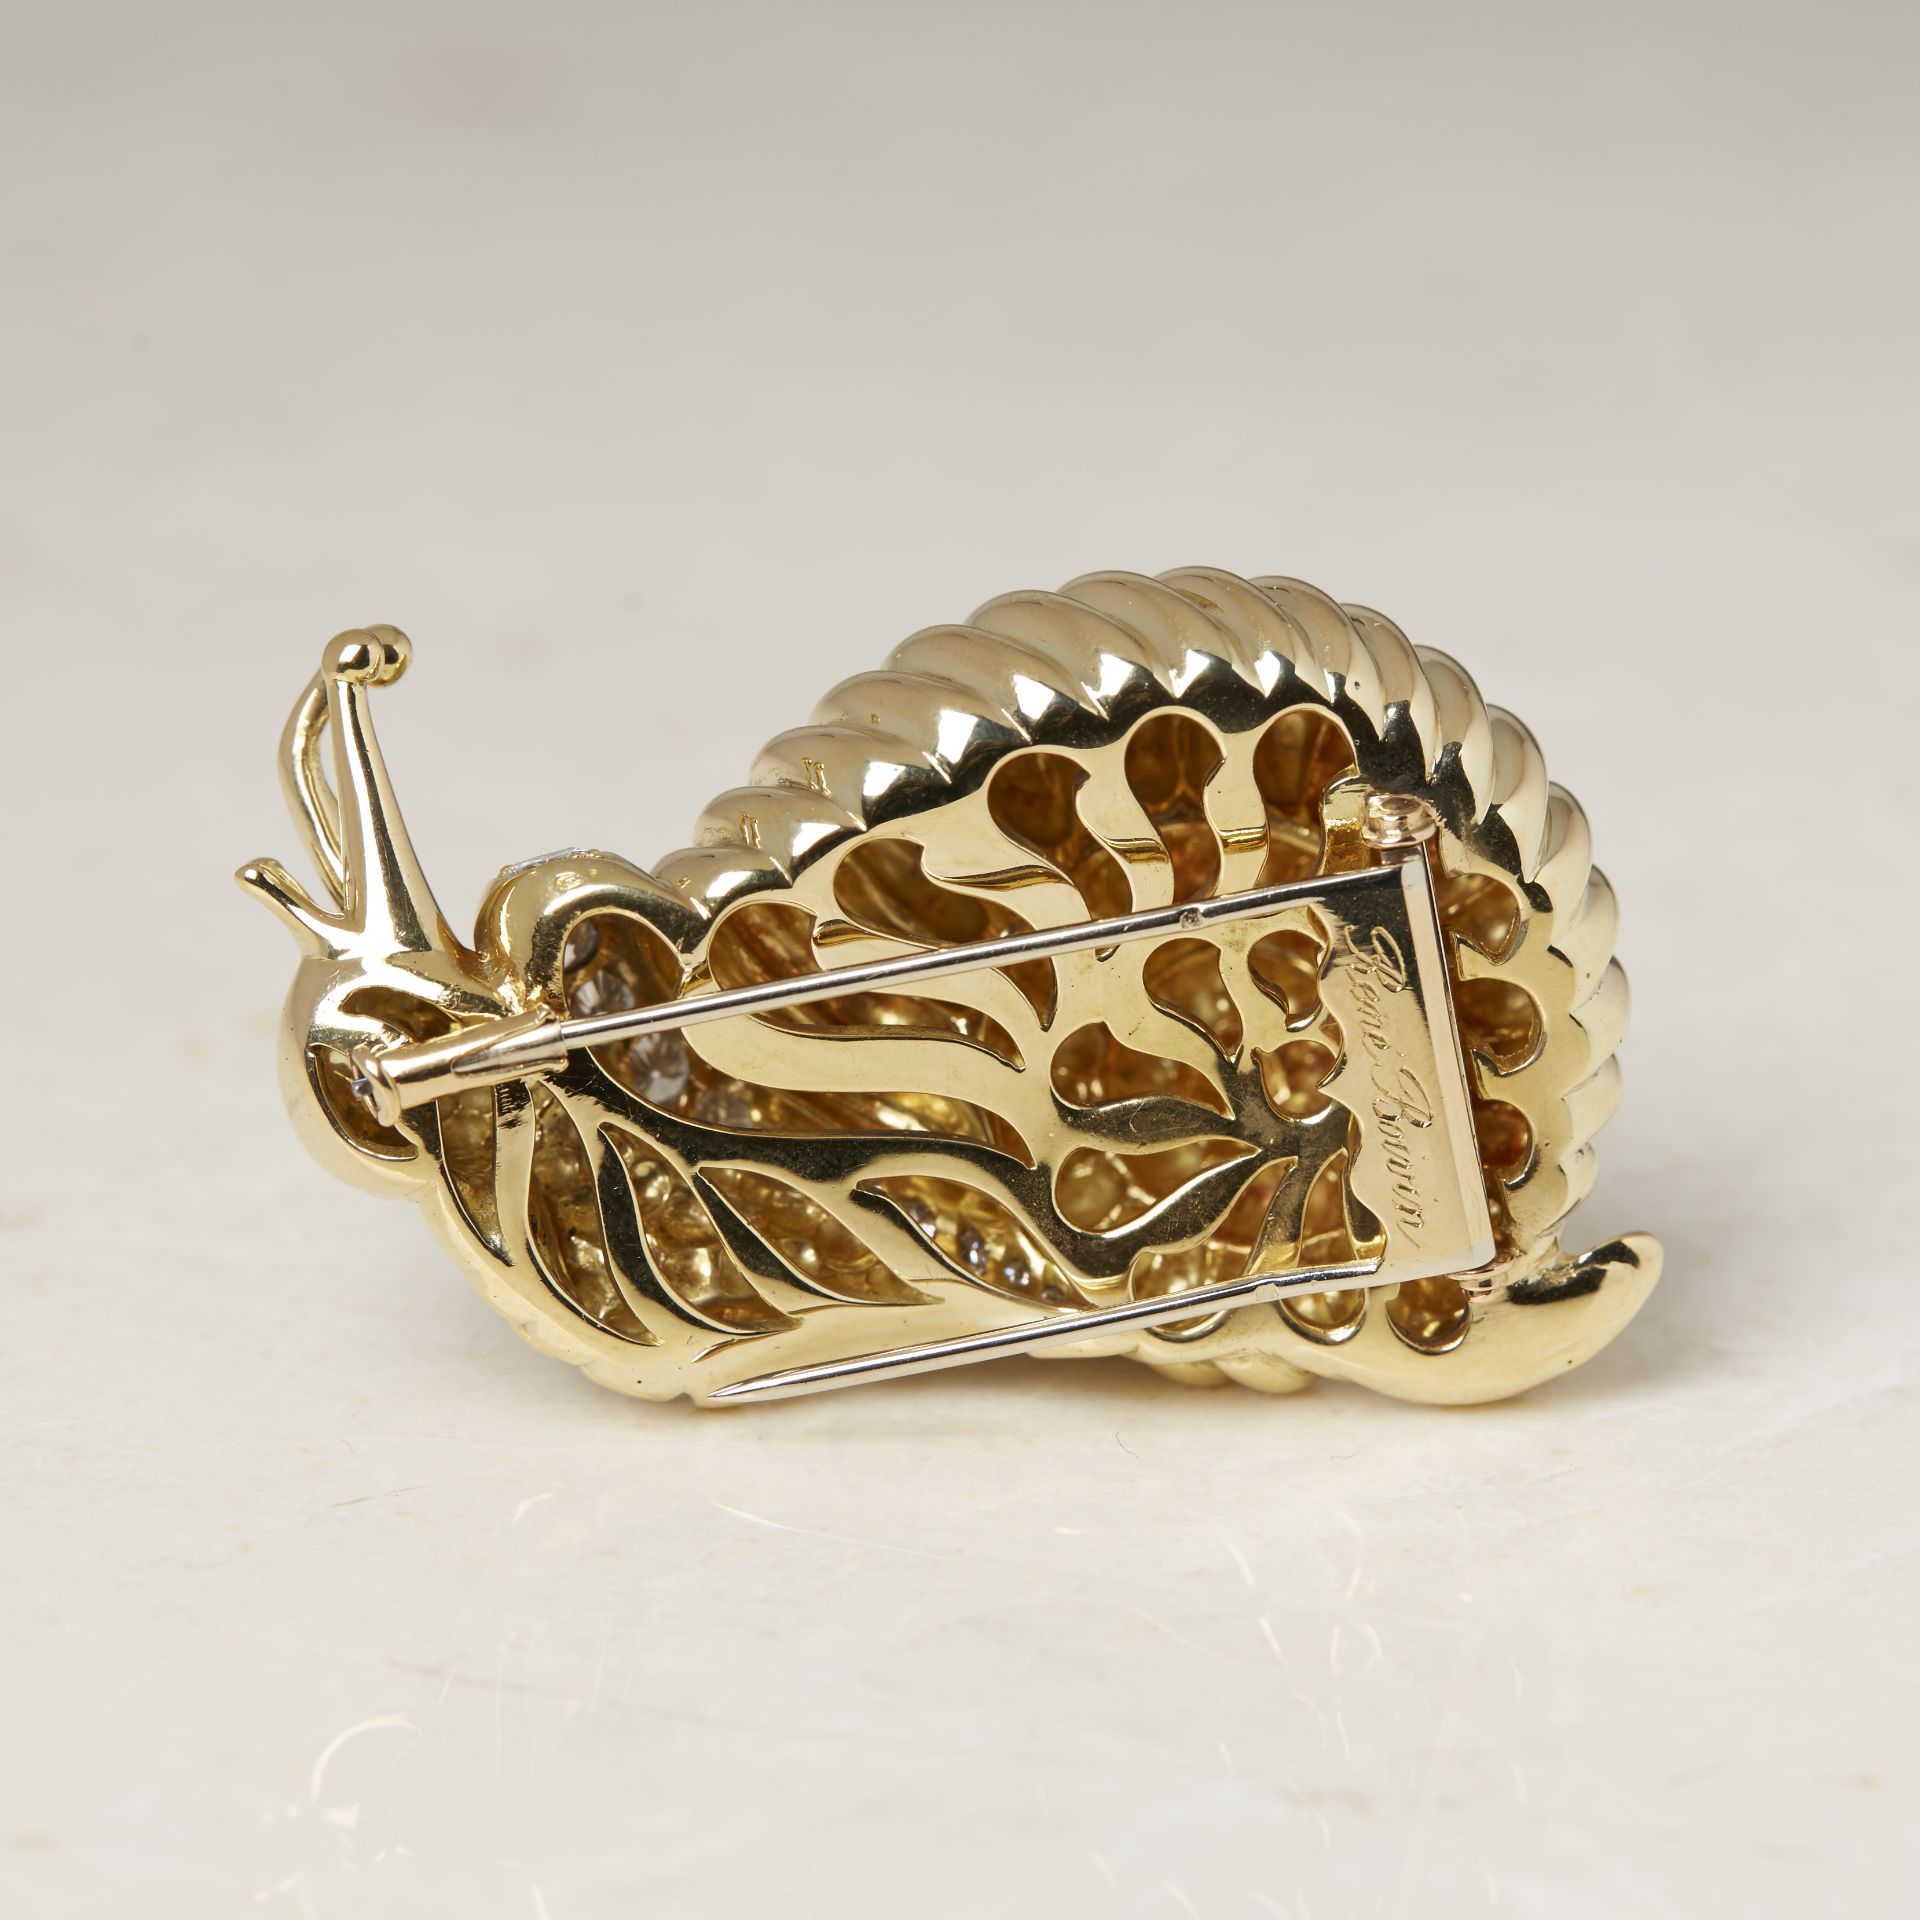 Rene Boivin 18k Yellow Gold Diamond Snail Brooch with Presentation Box - Image 6 of 19